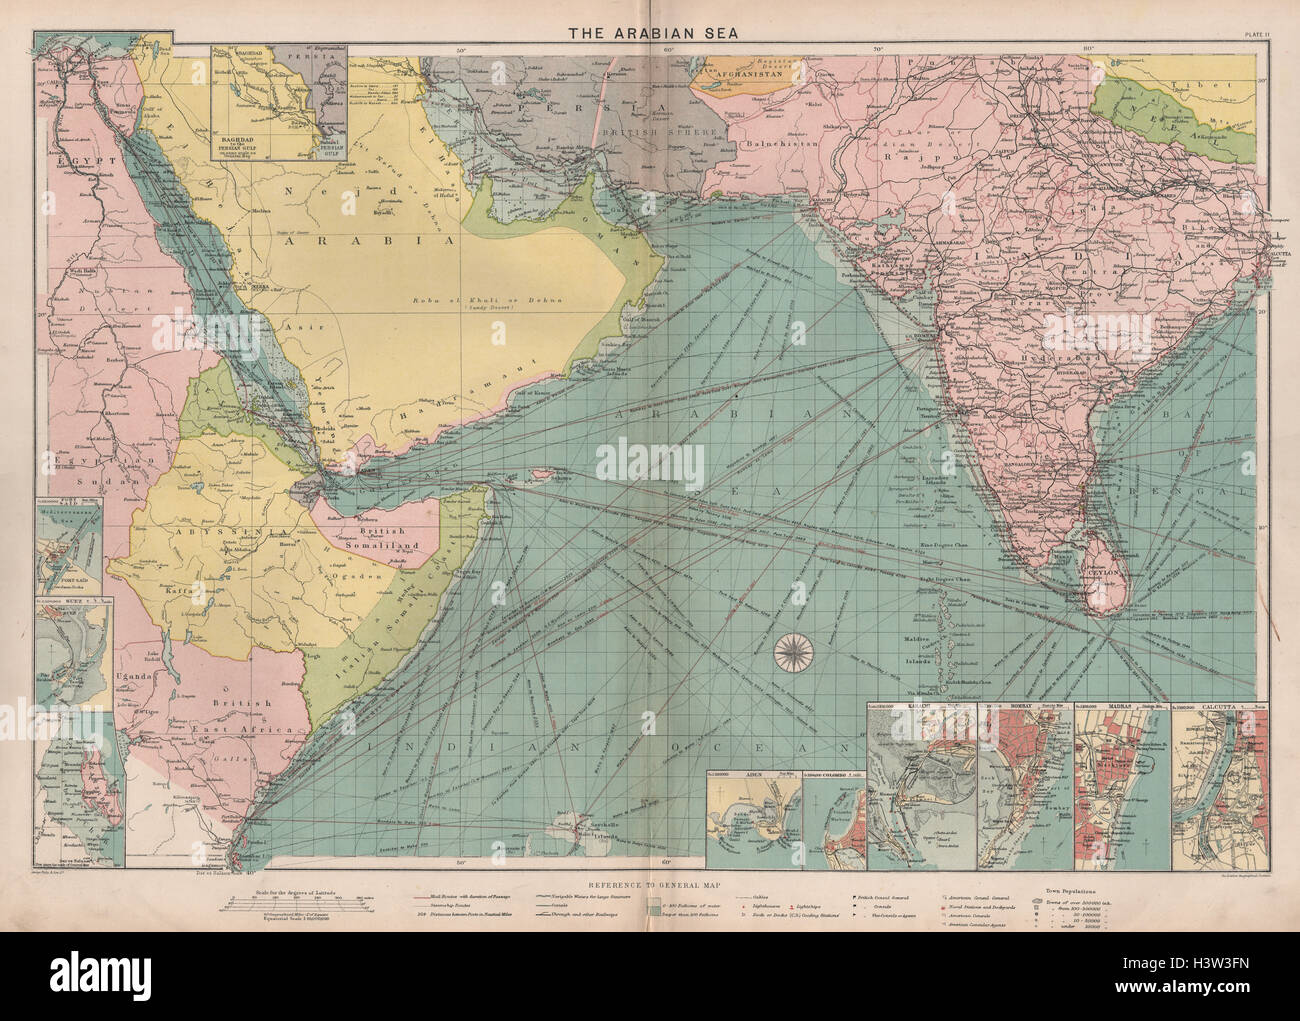 Red Mer Arabe Du Golfe Persique Mer Graphique Phares Ports Mail Un Grand C1914 La Carte Photo Stock Alamy